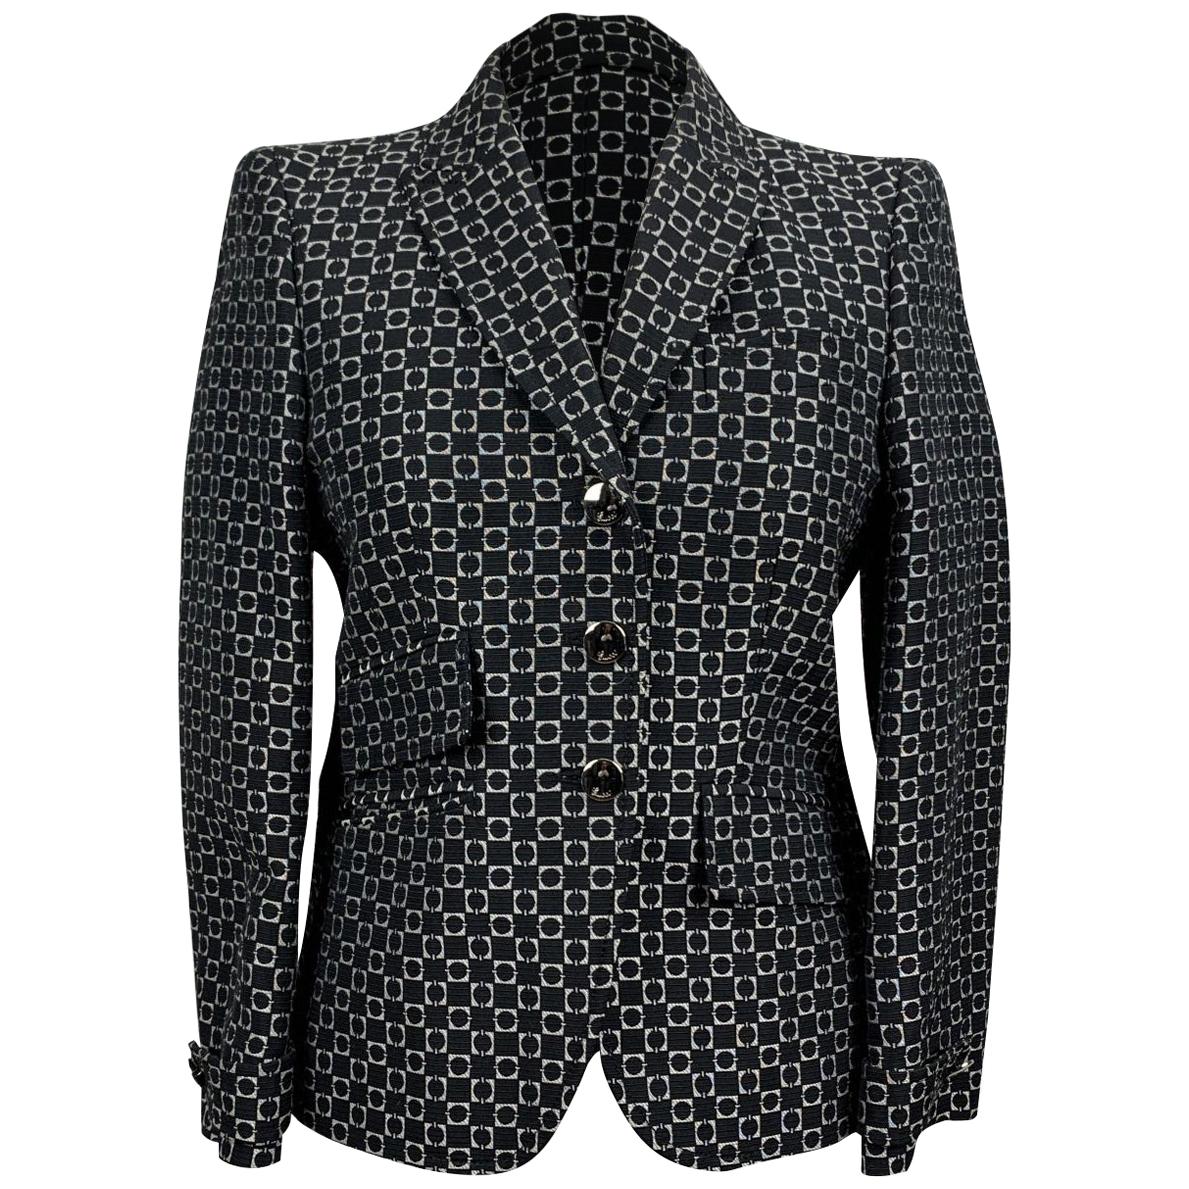 Gucci Black Patterned Cotton and Silk Blazer Jacket Size 40 IT